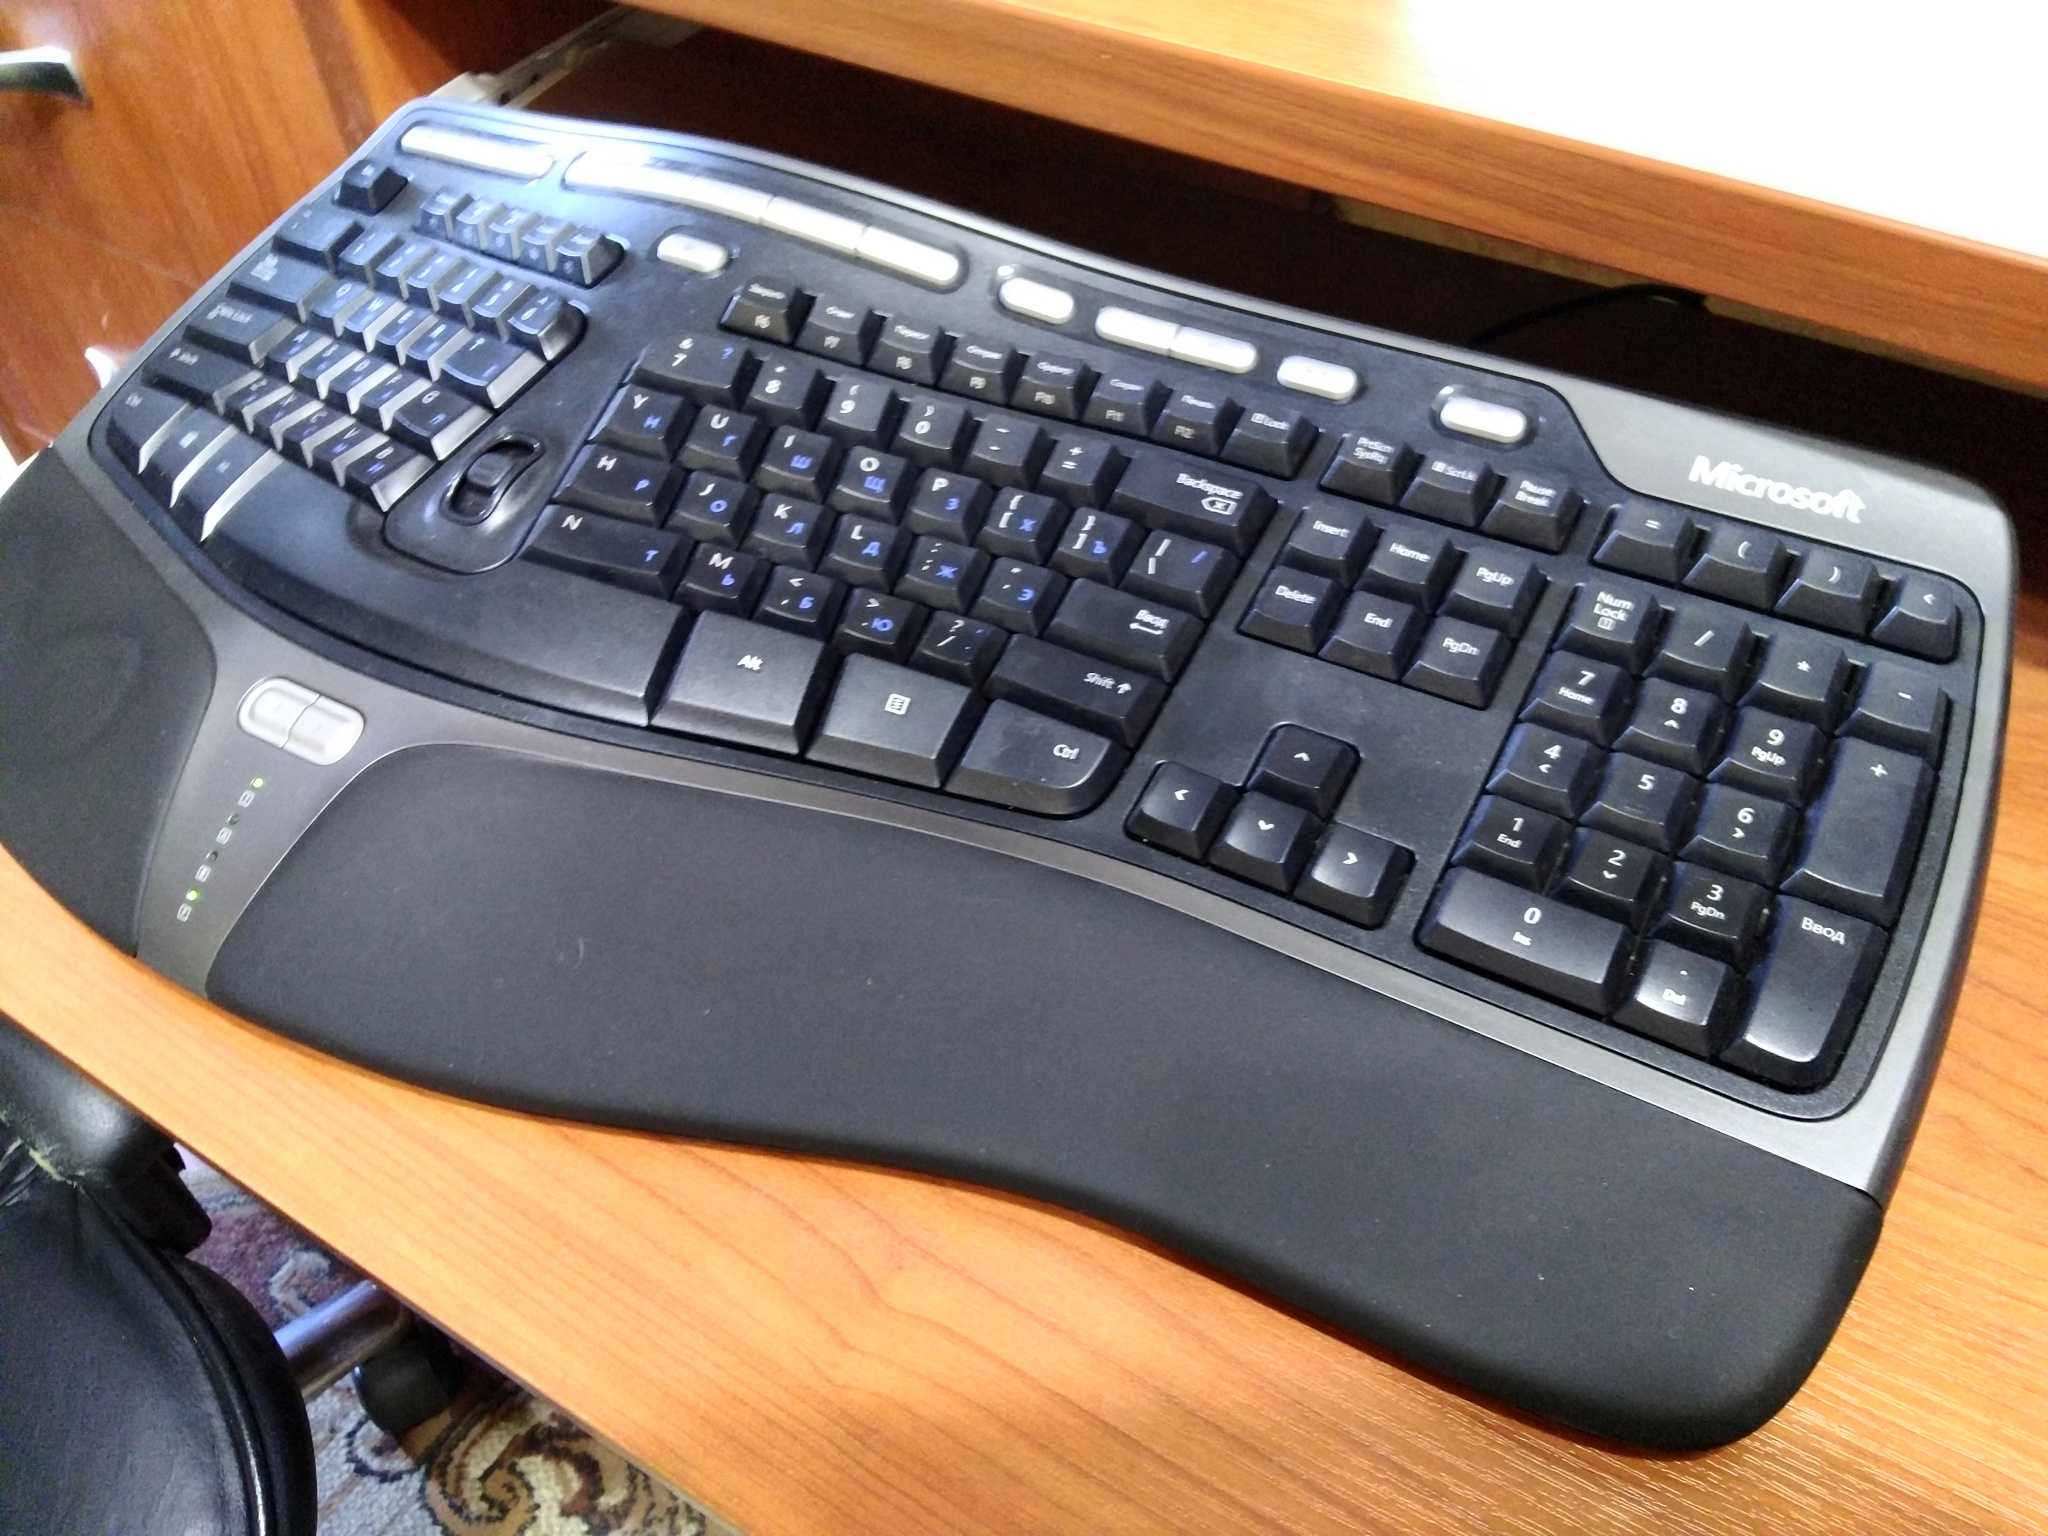 Microsoft natural ergonomic keyboard 4000 black usb отзывы покупателей и специалистов на отзовик